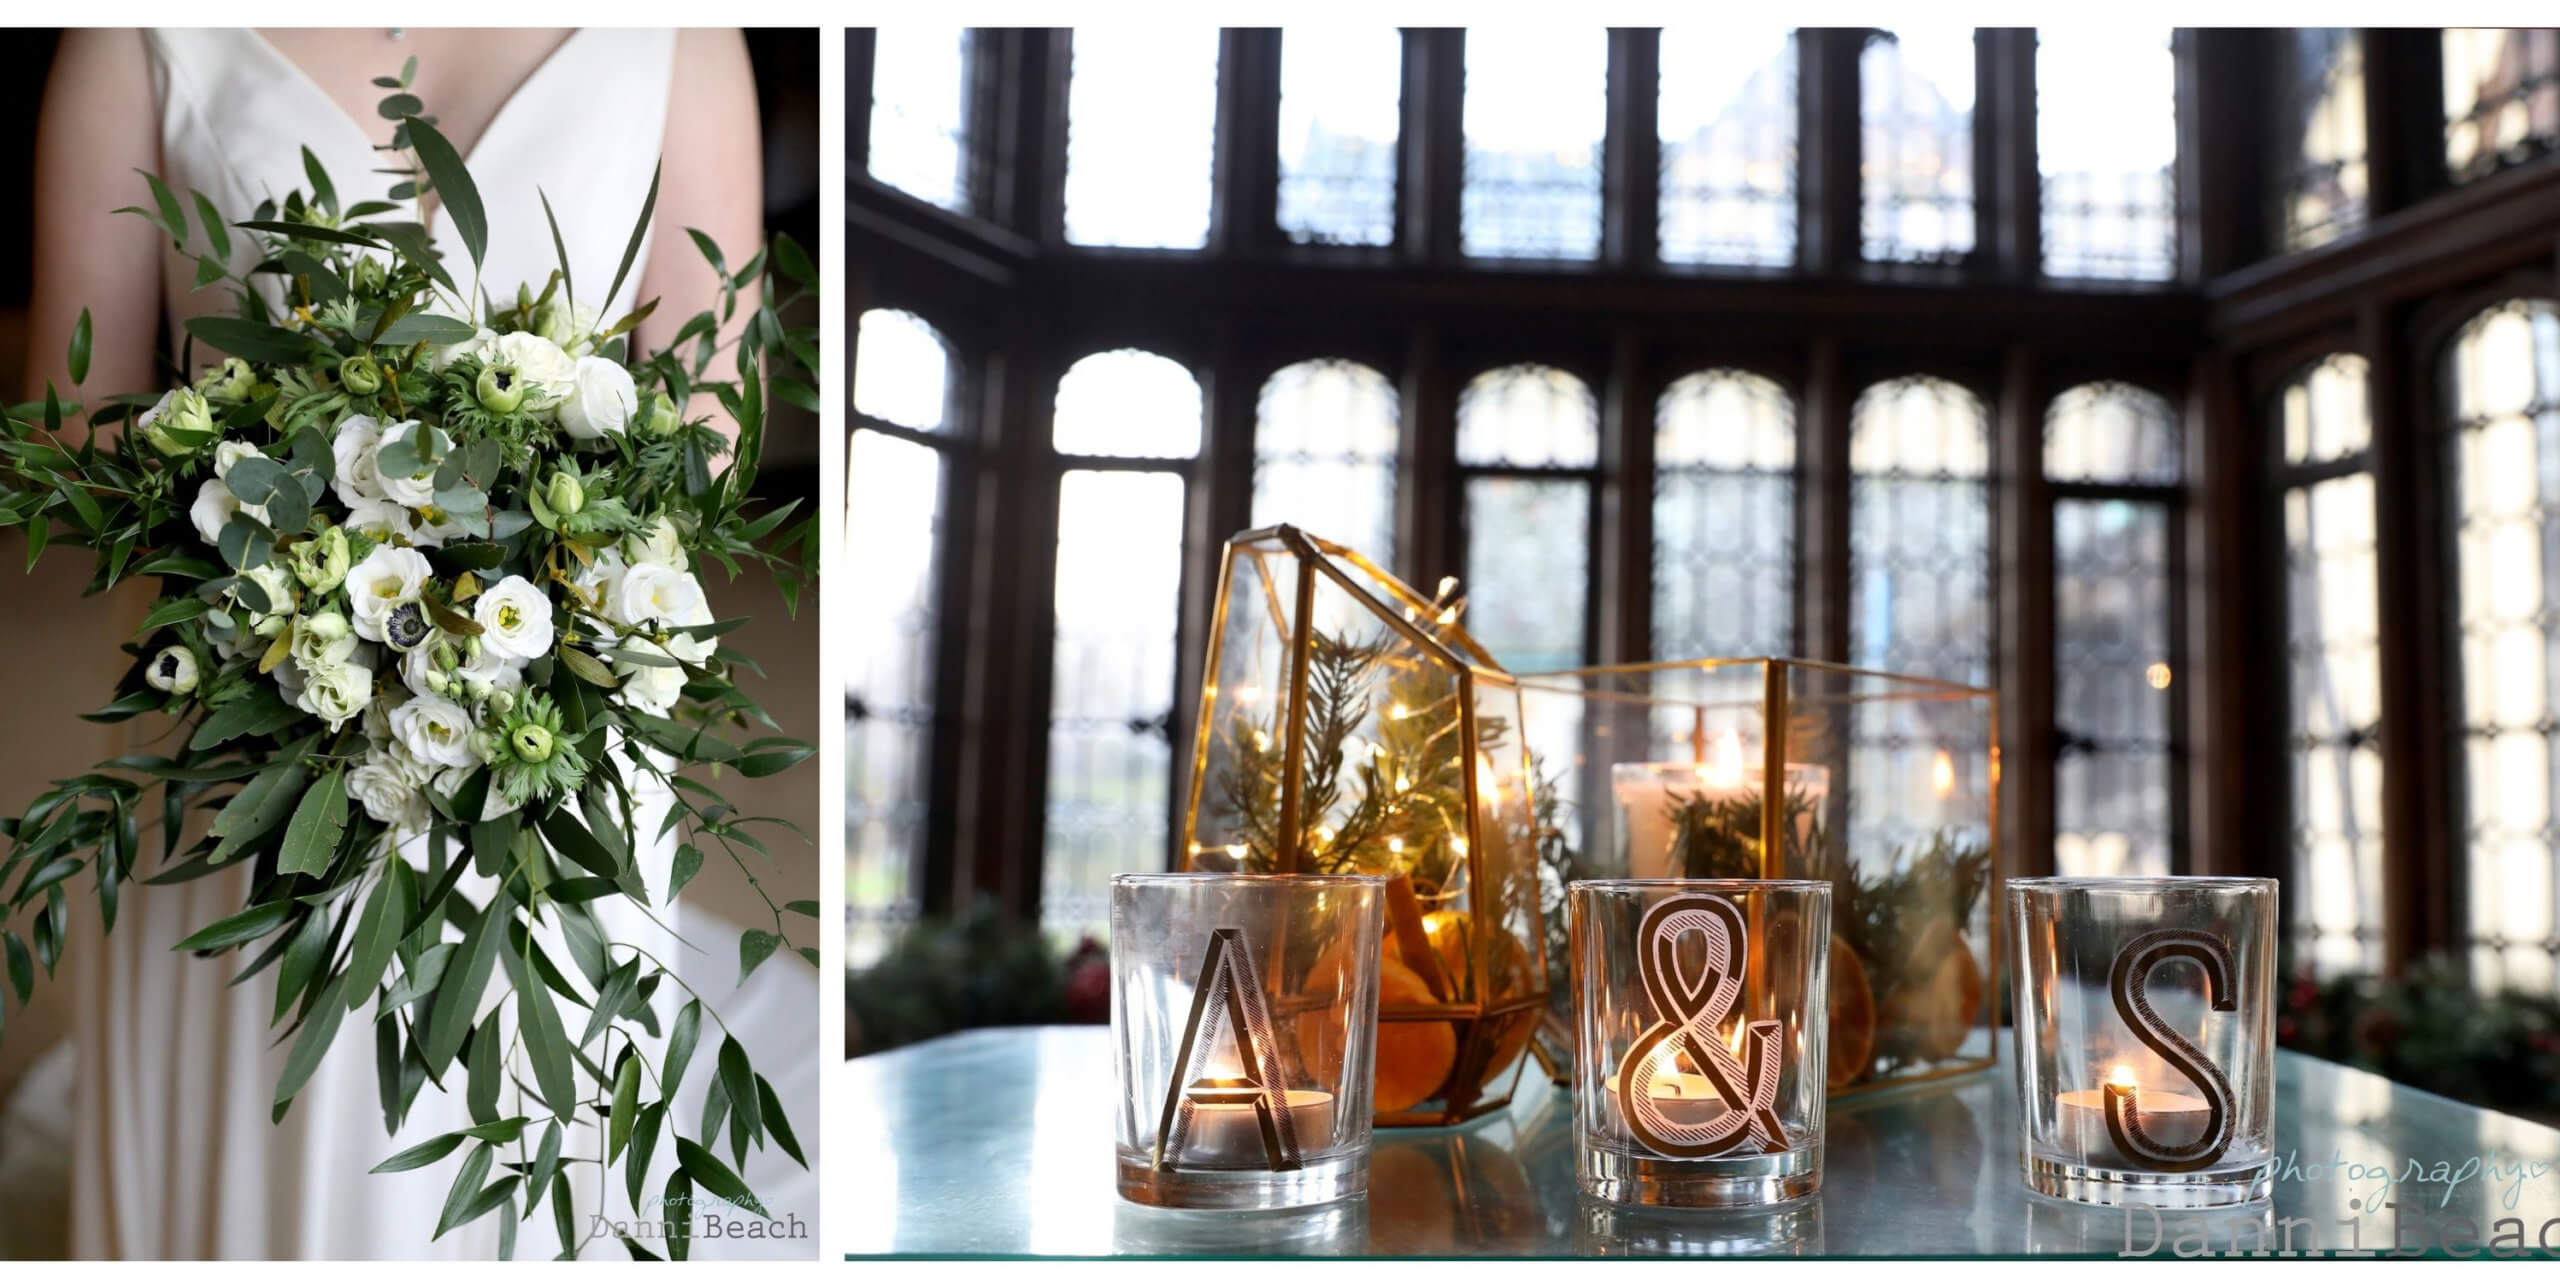 Tea lights Hever Castle wedding